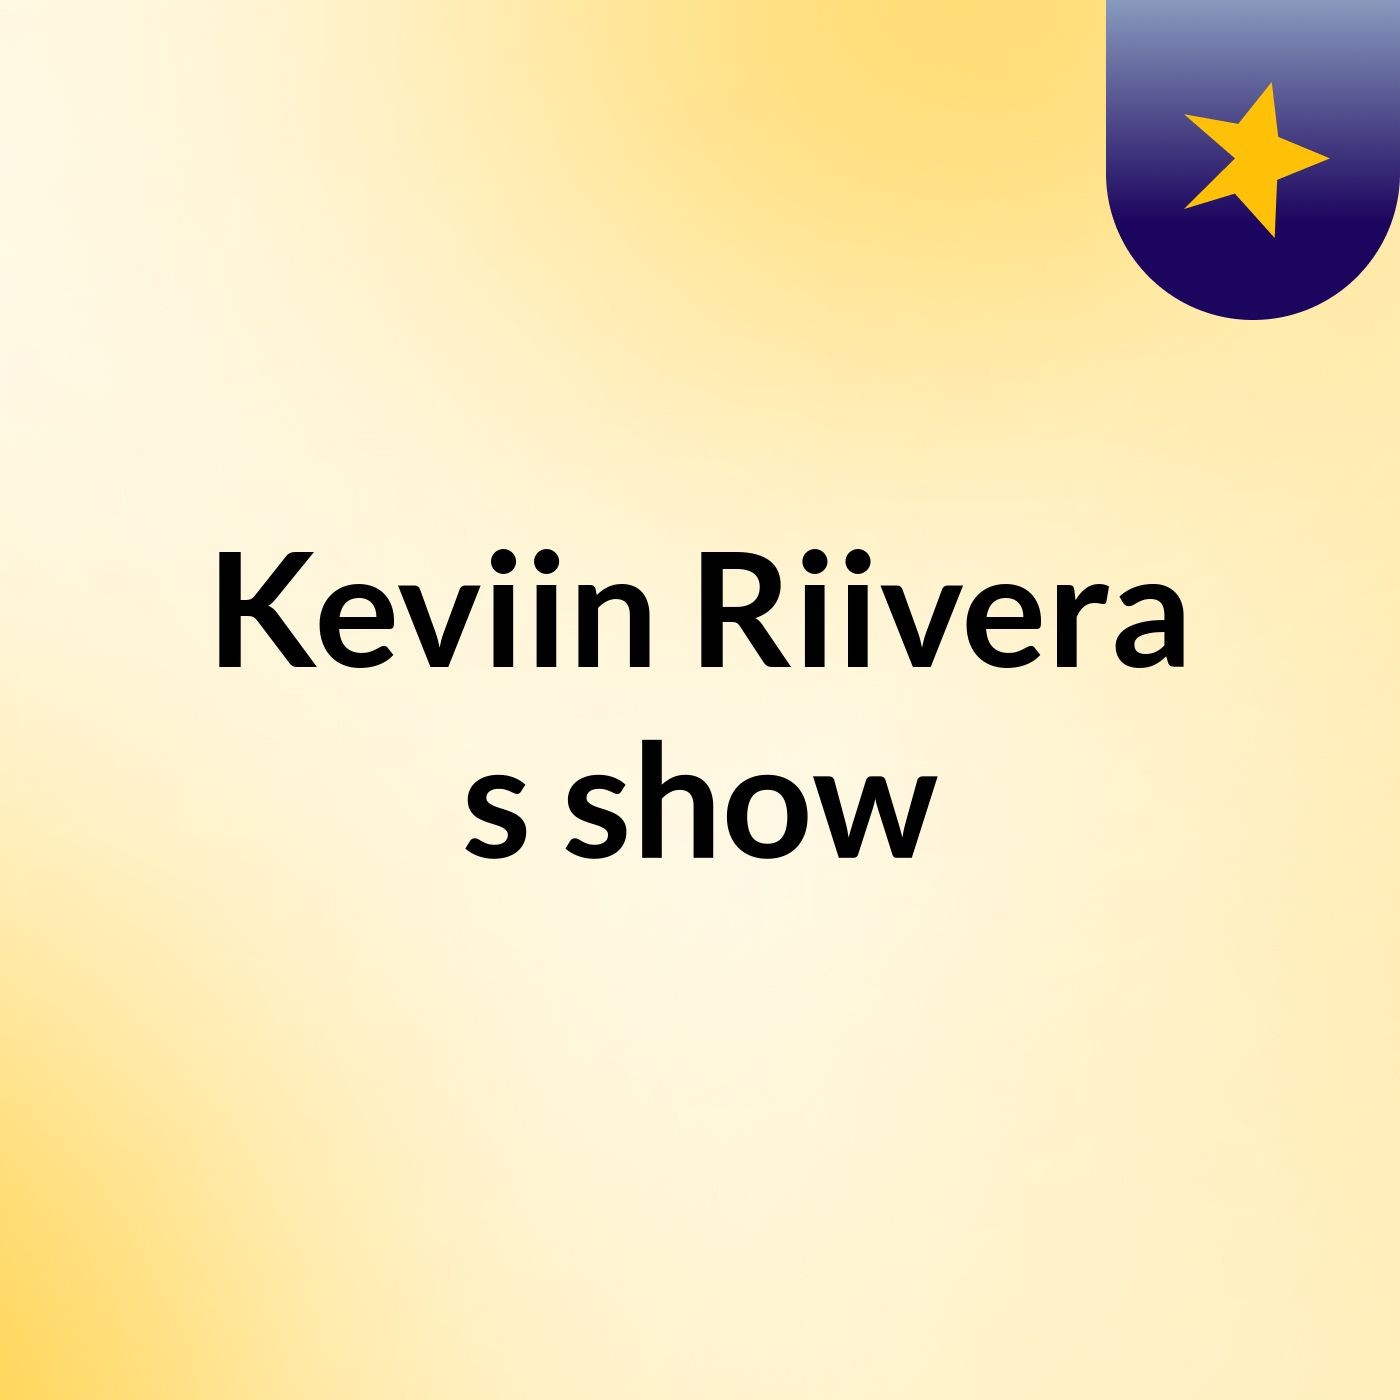 Keviin Riivera's show